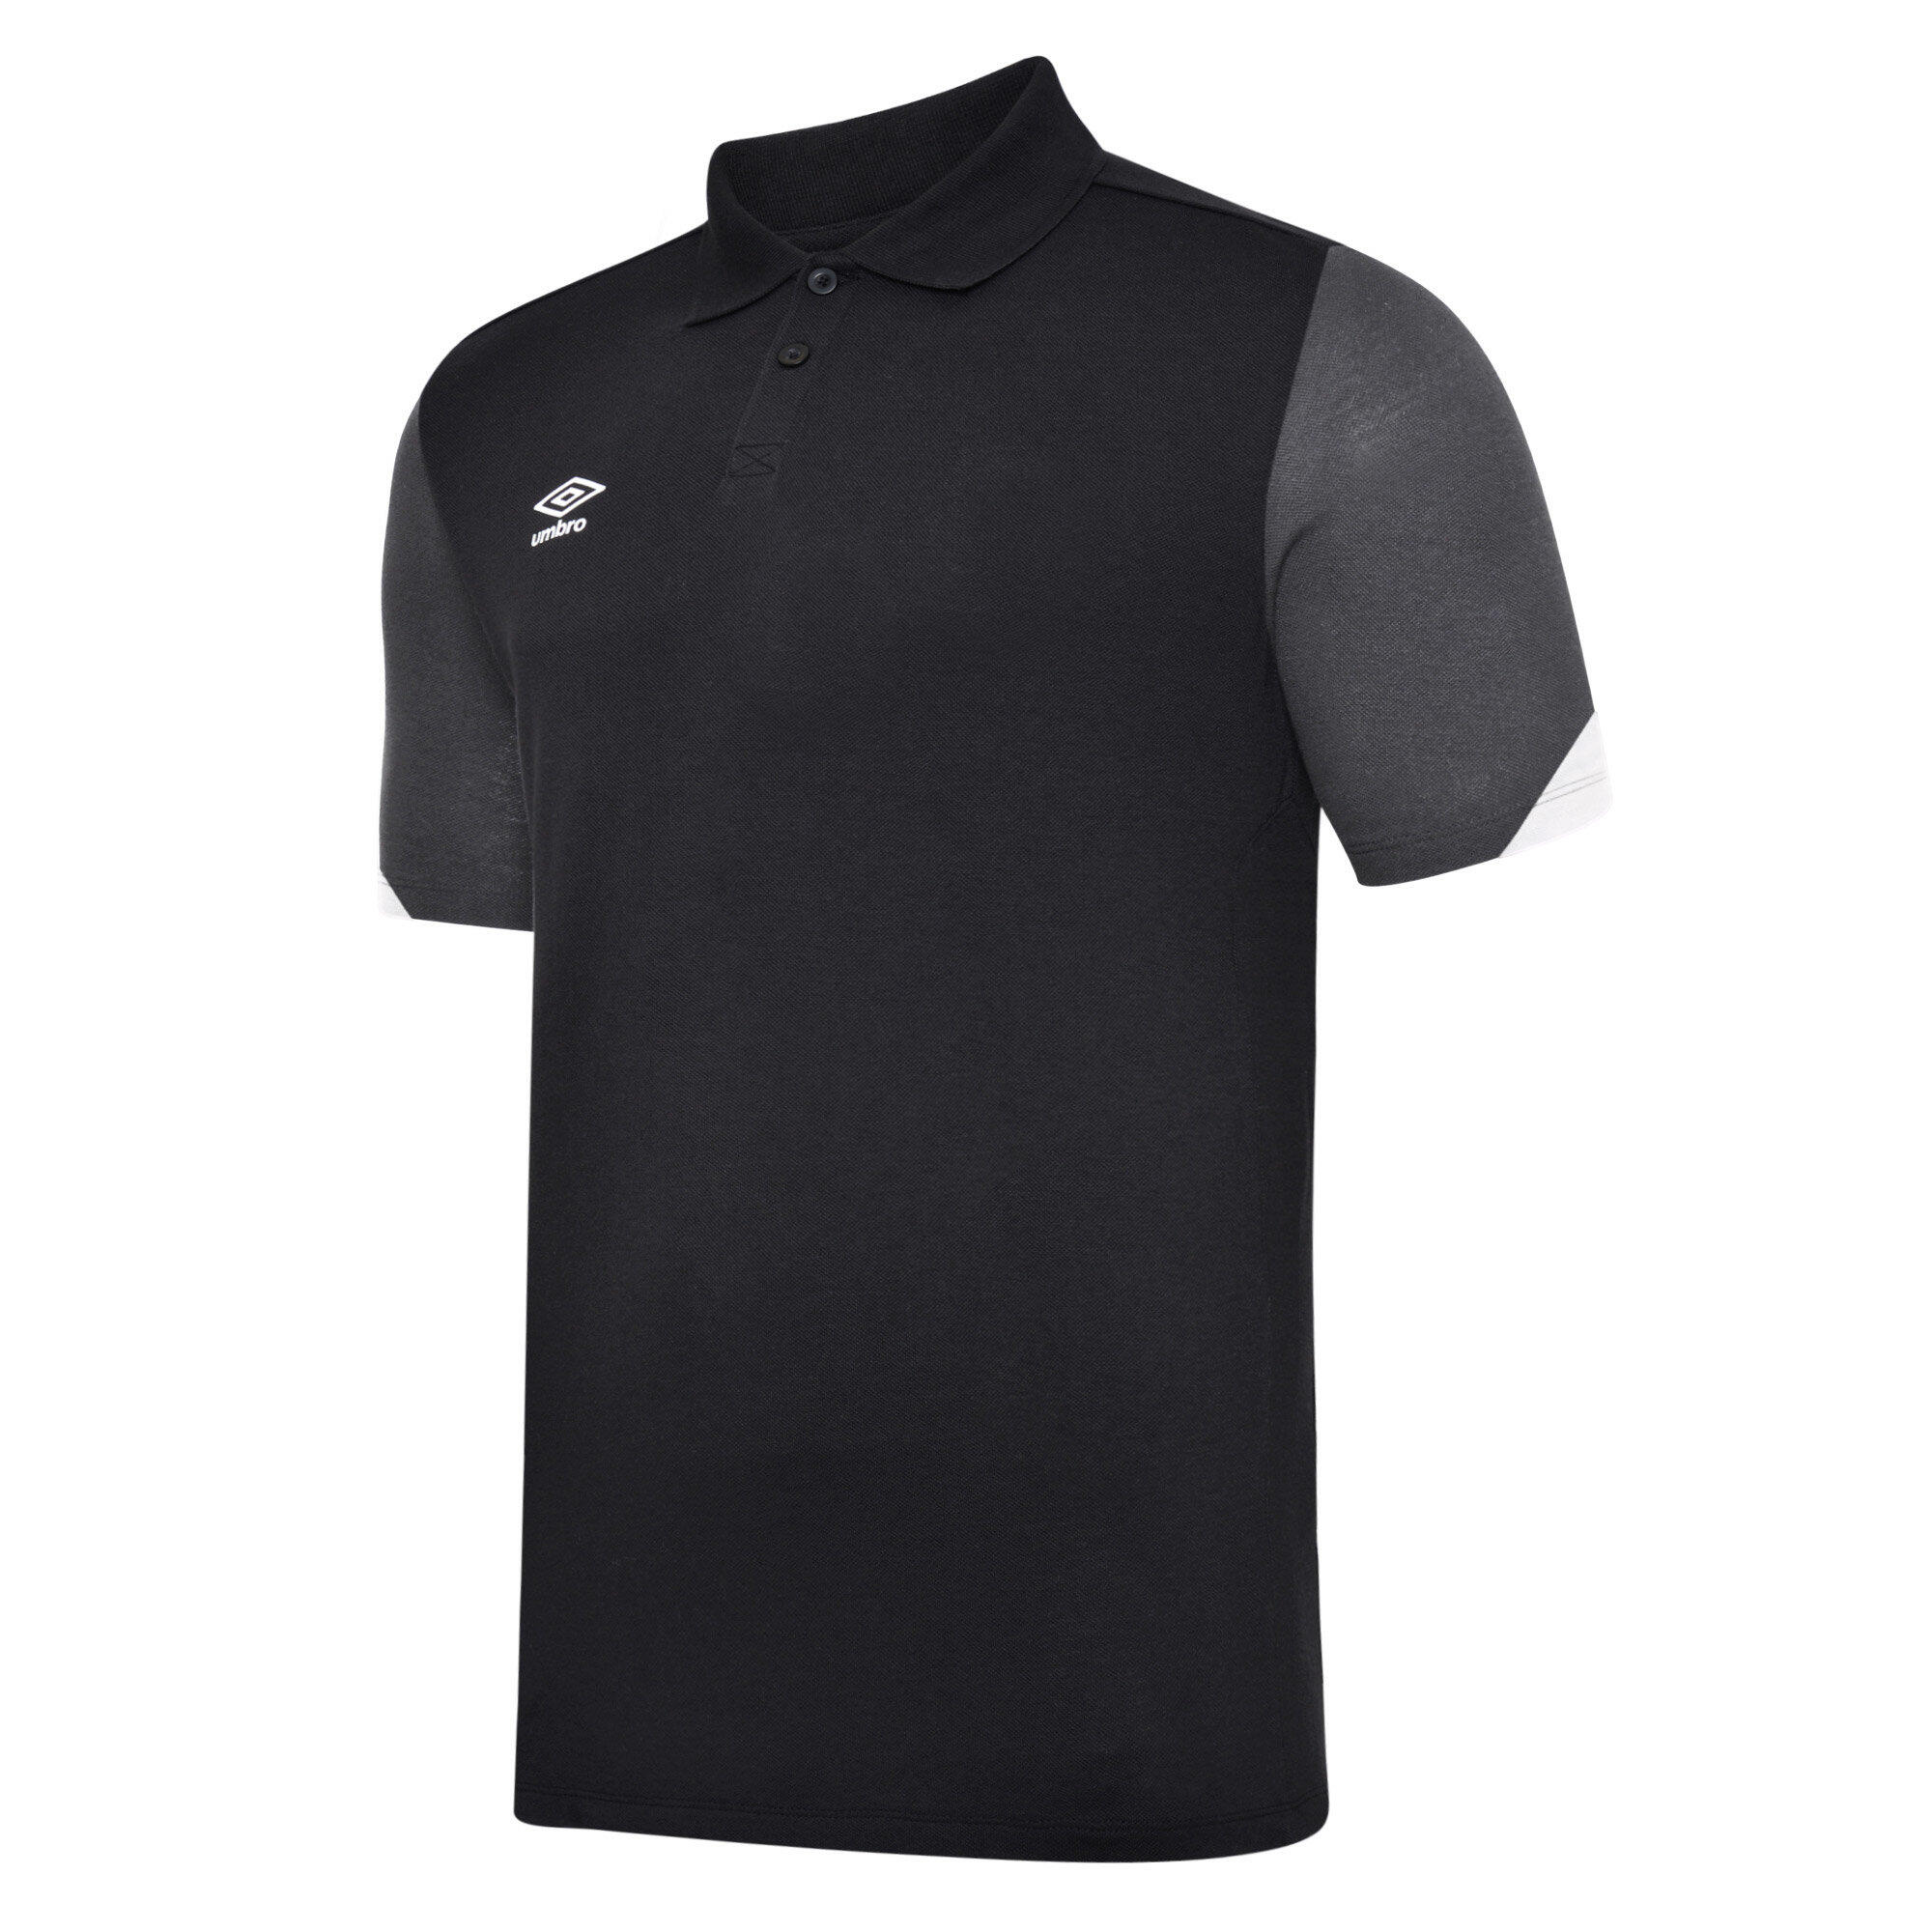 UMBRO Mens Total Training Polo Shirt (Black/White/Carbon)